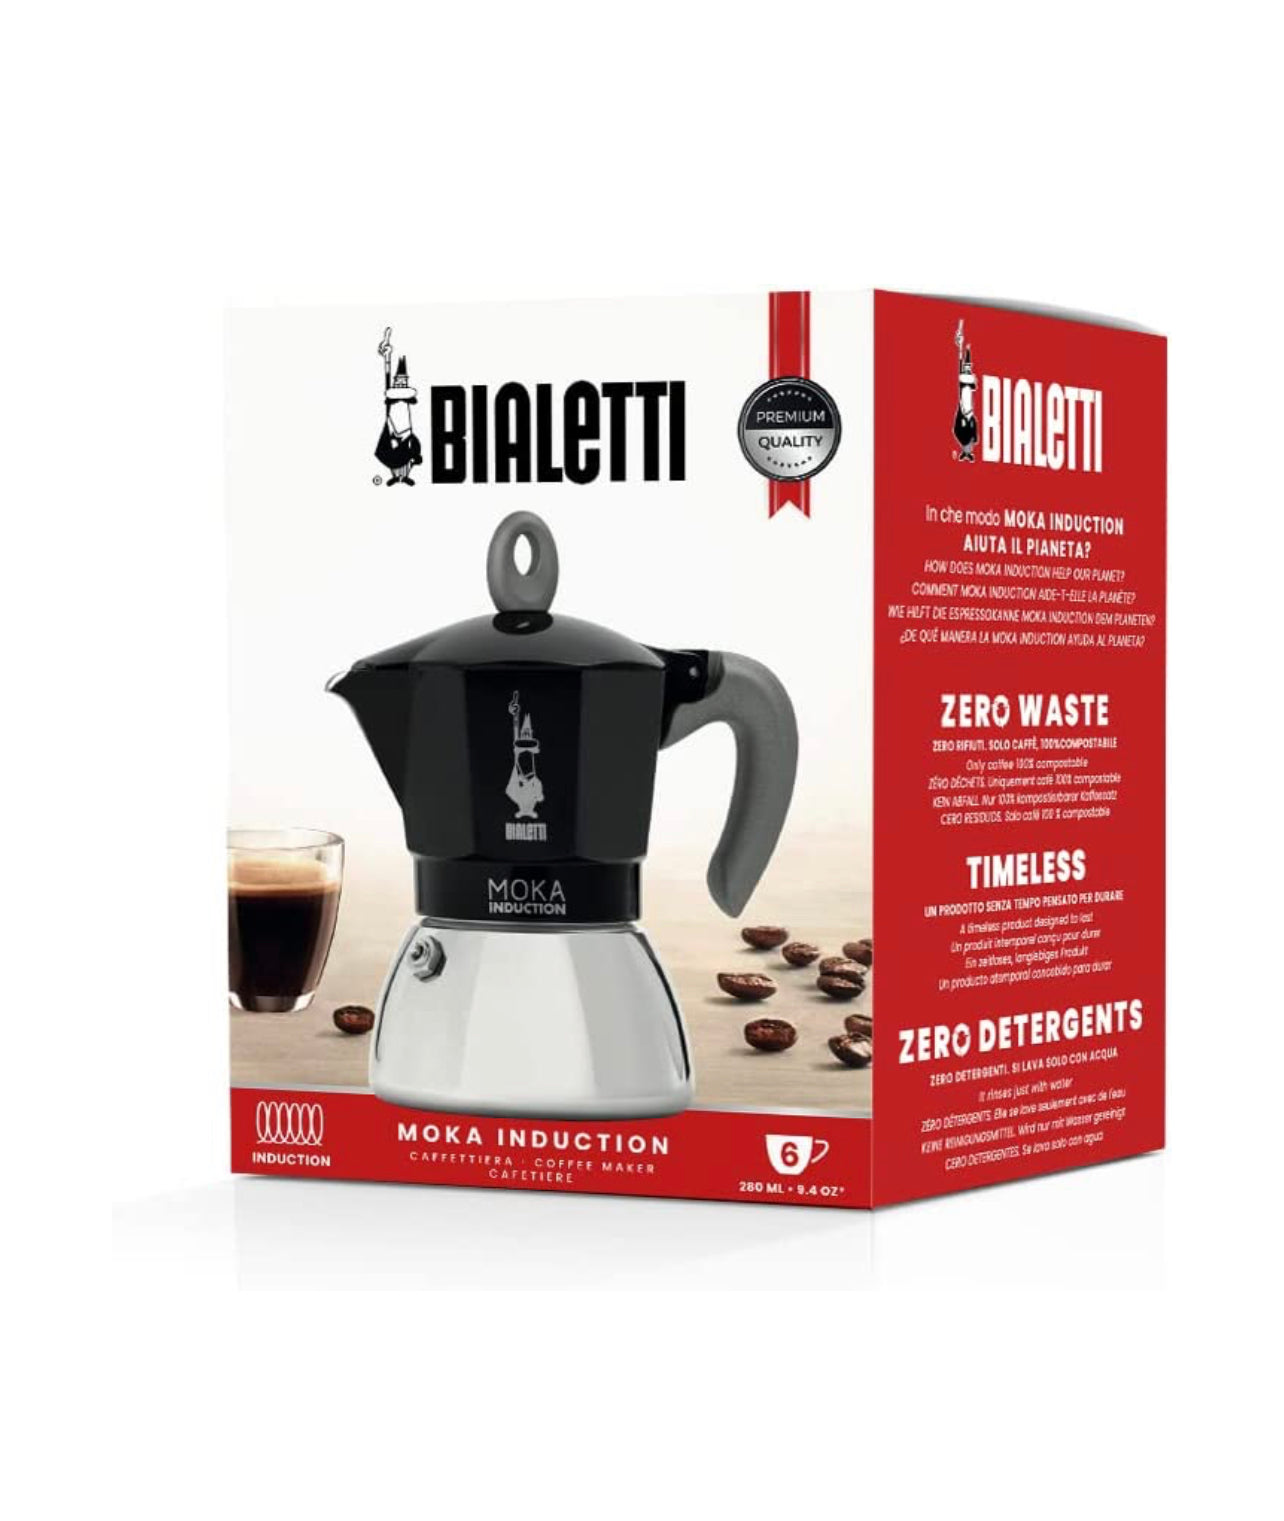 Bialetti Moka Express Red/Black, Stovetop Coffee Maker